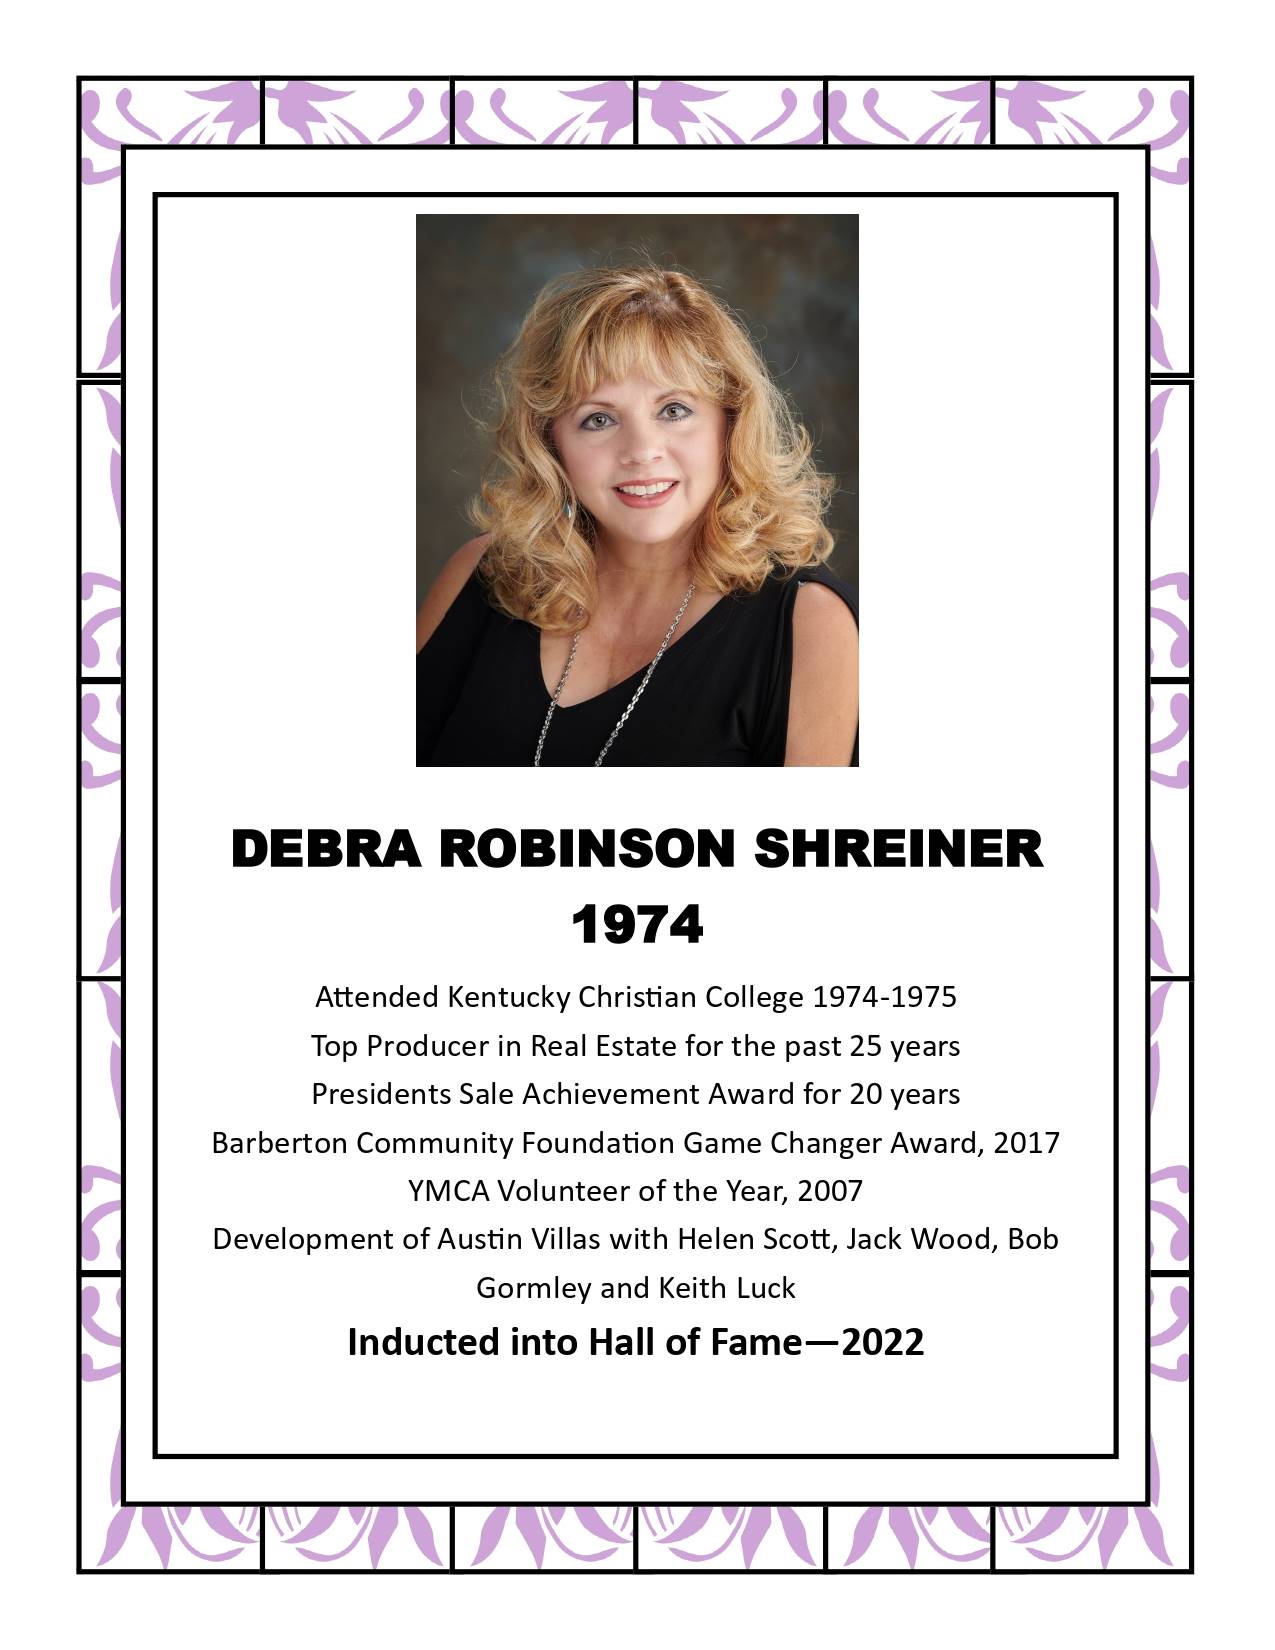 Debra Robinson Shreiner